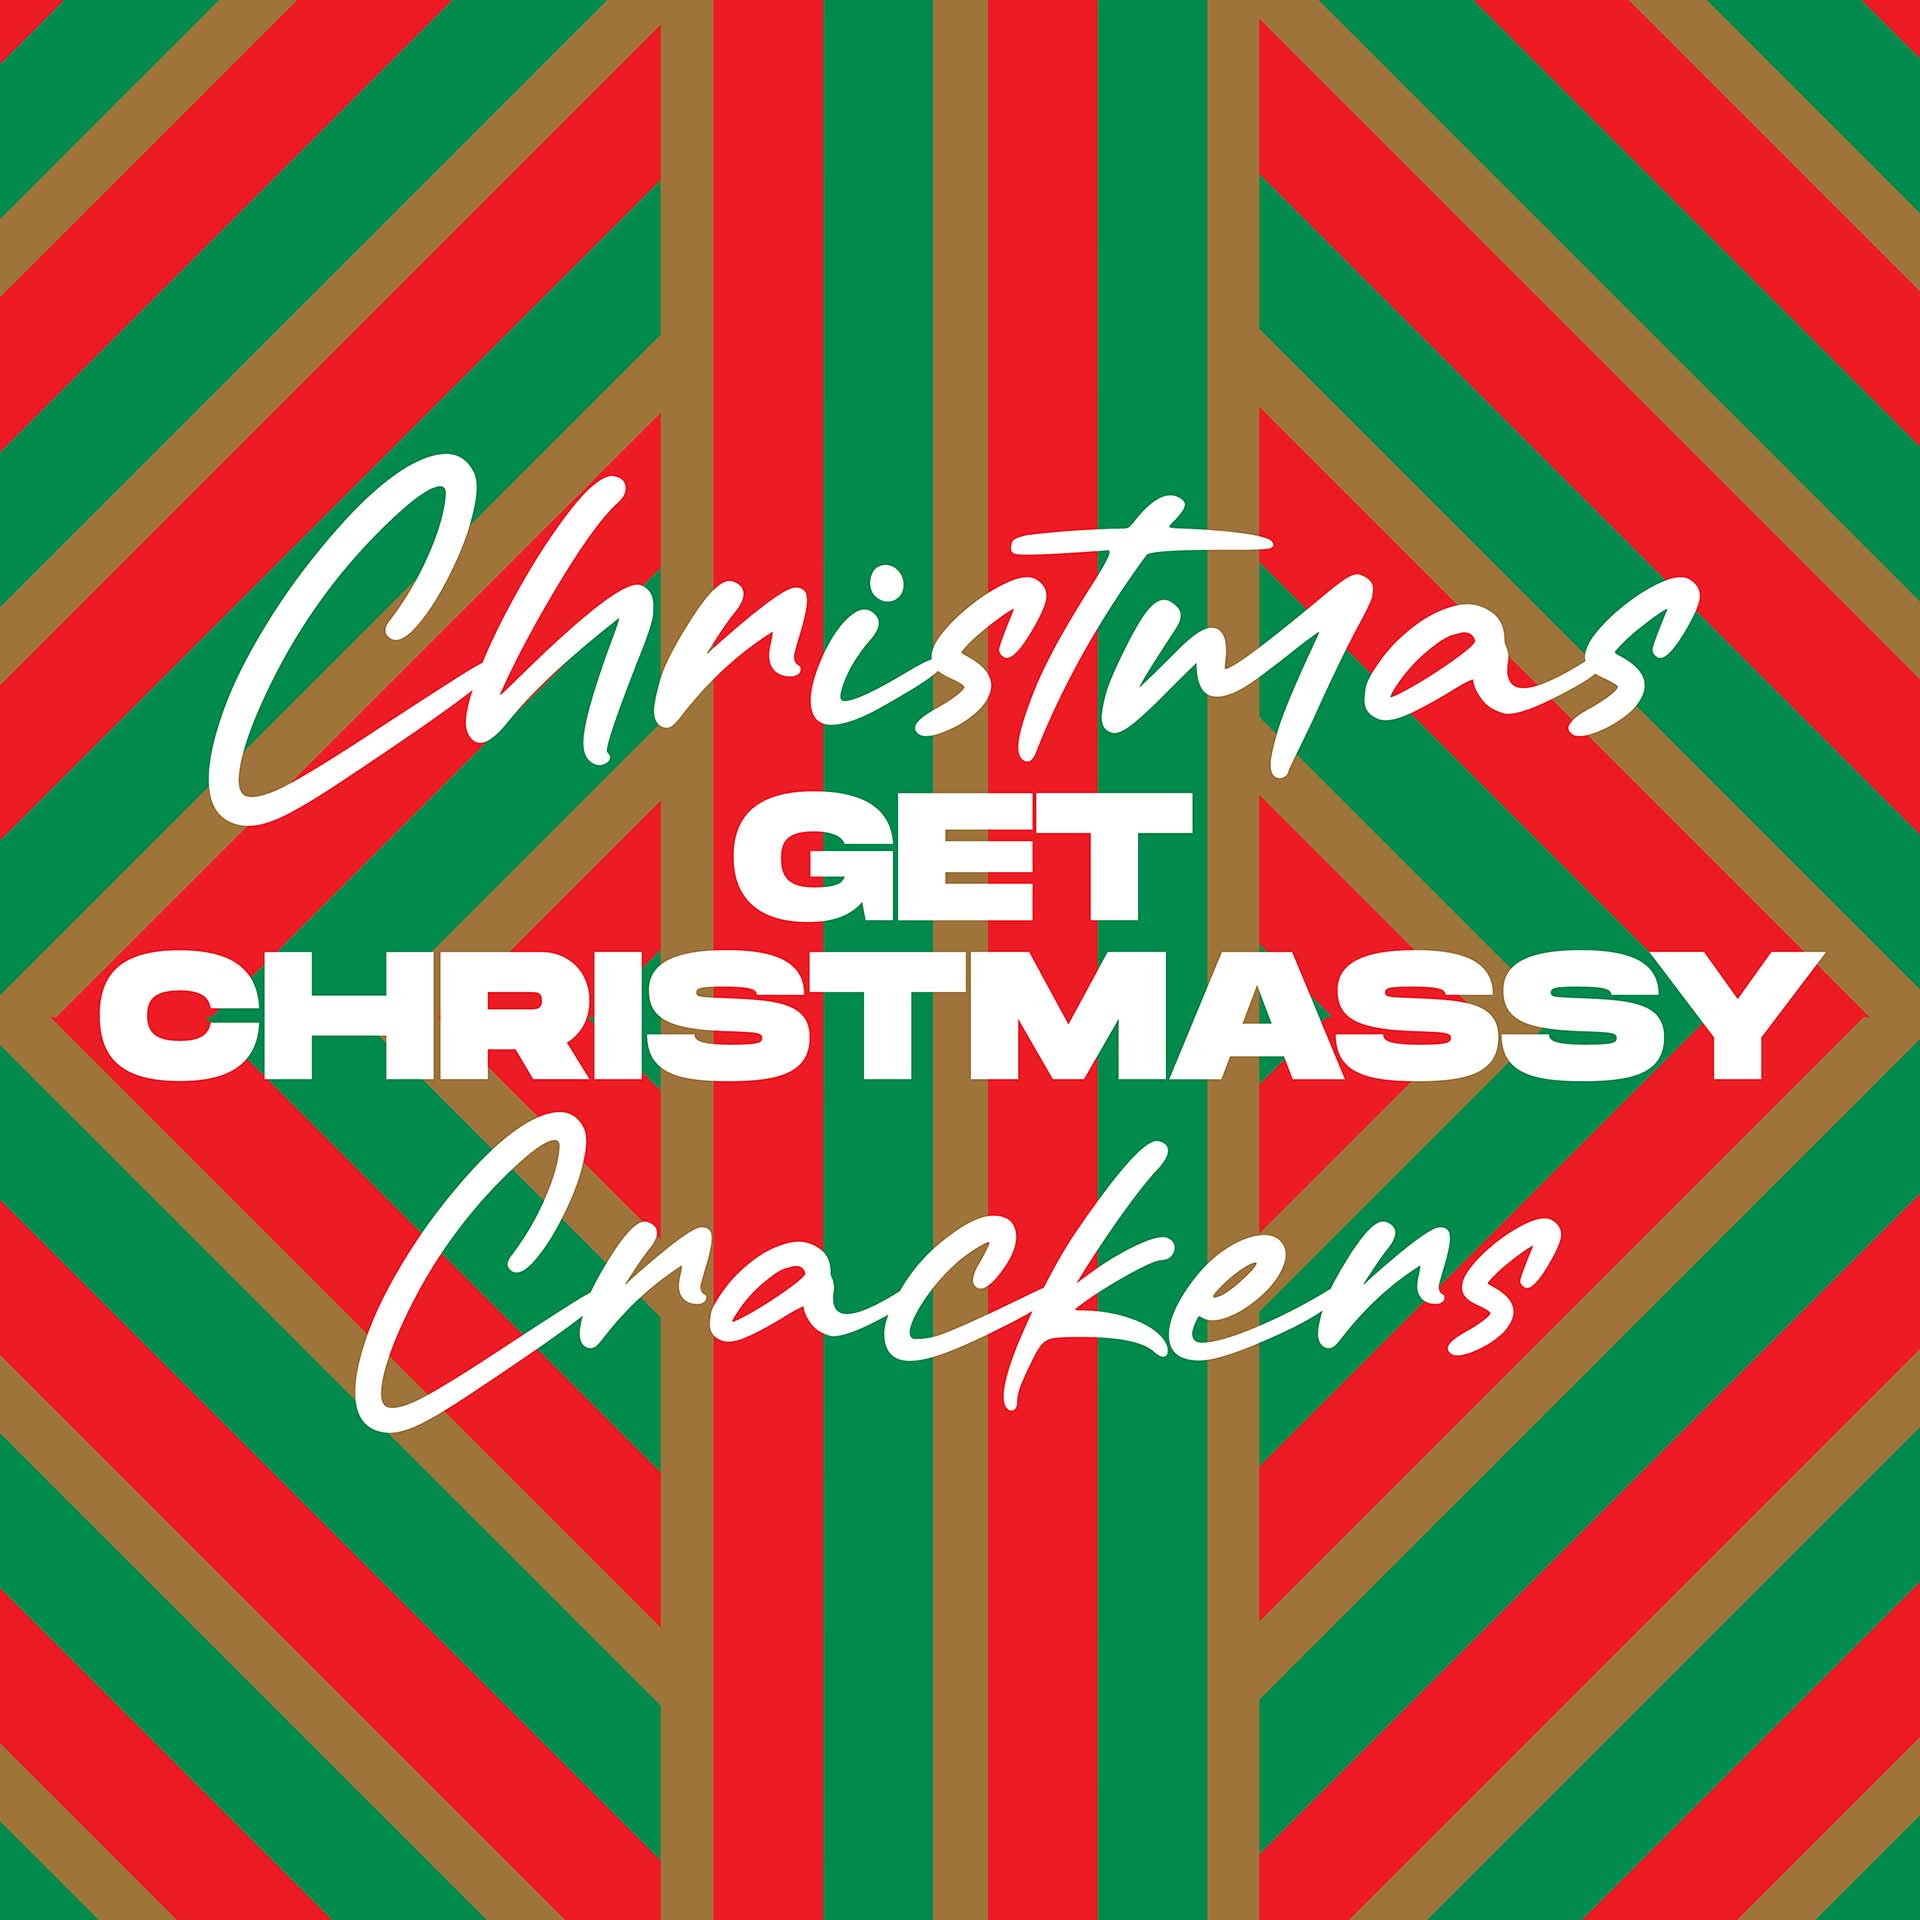 Christmas Crackers Get Christmassy